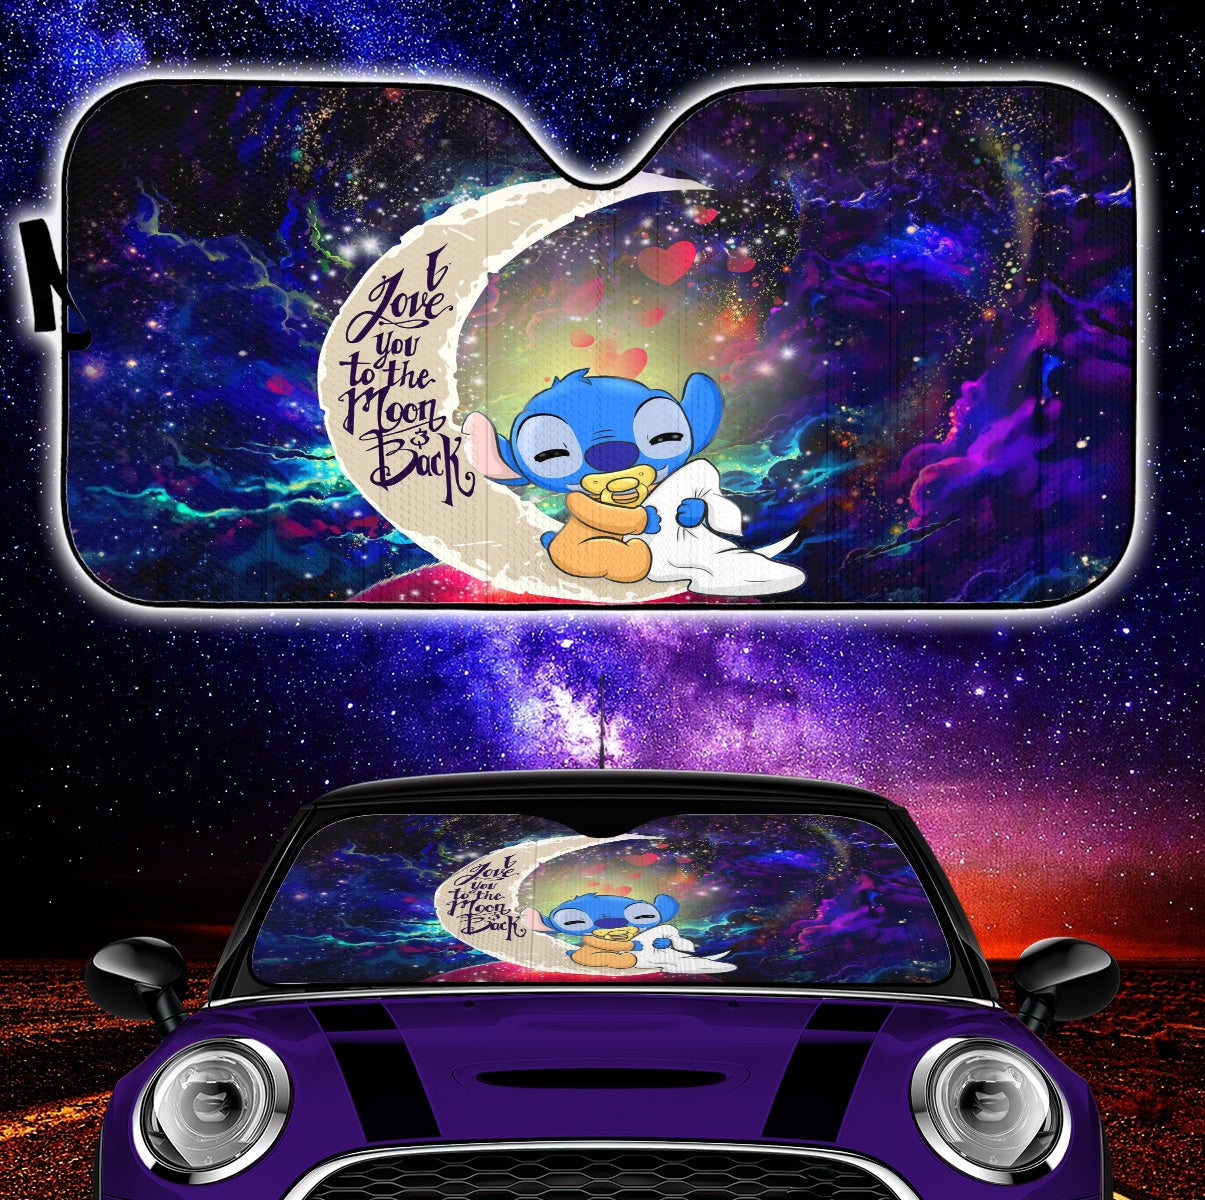 Cute Baby Stitch Sleep Love You To The Moon Galaxy Car Auto Sunshades